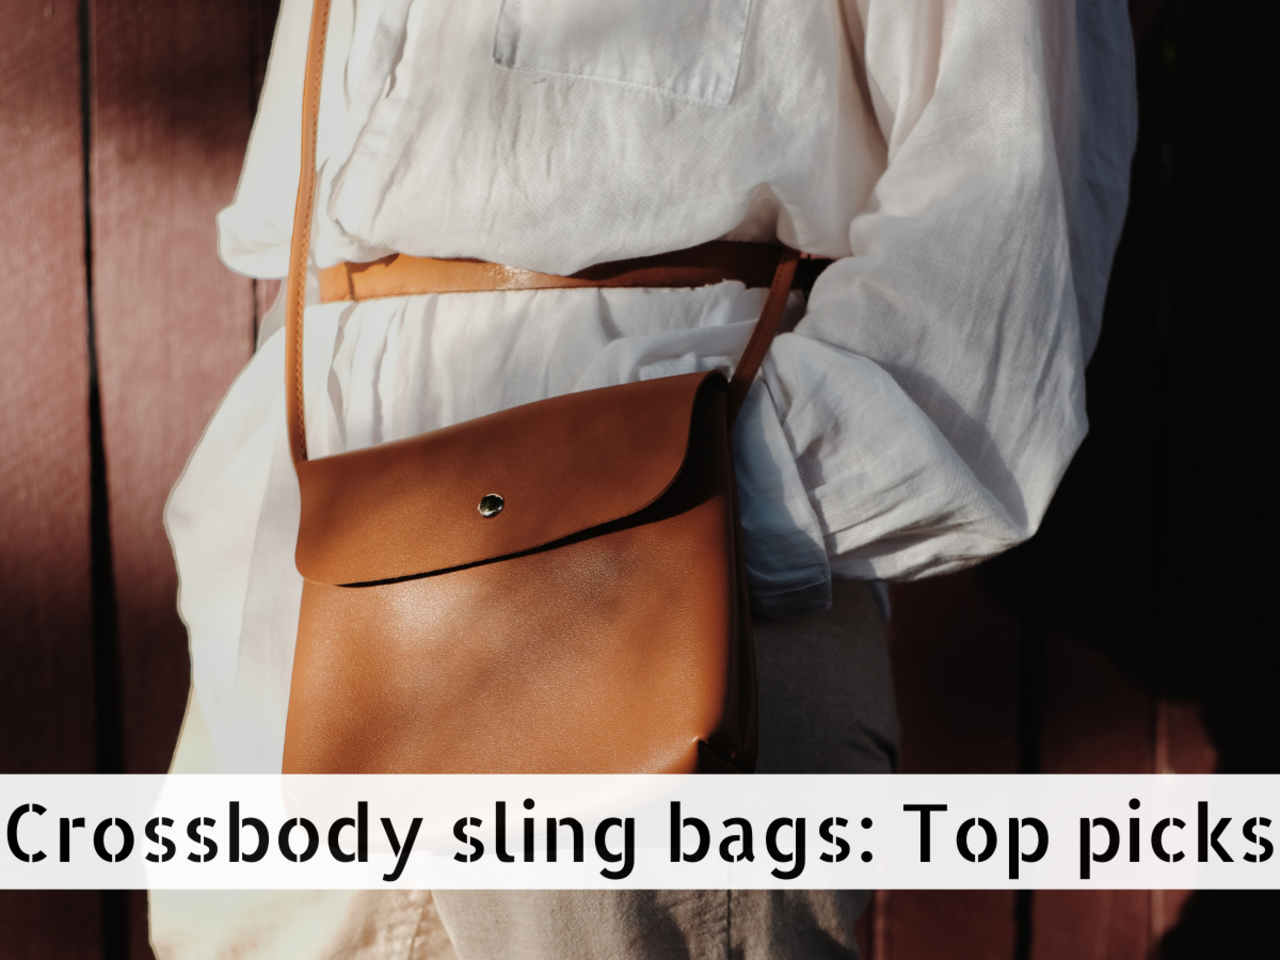 MINISO Retro Soft Rectangle Women Crossbody Bag with Flap Top